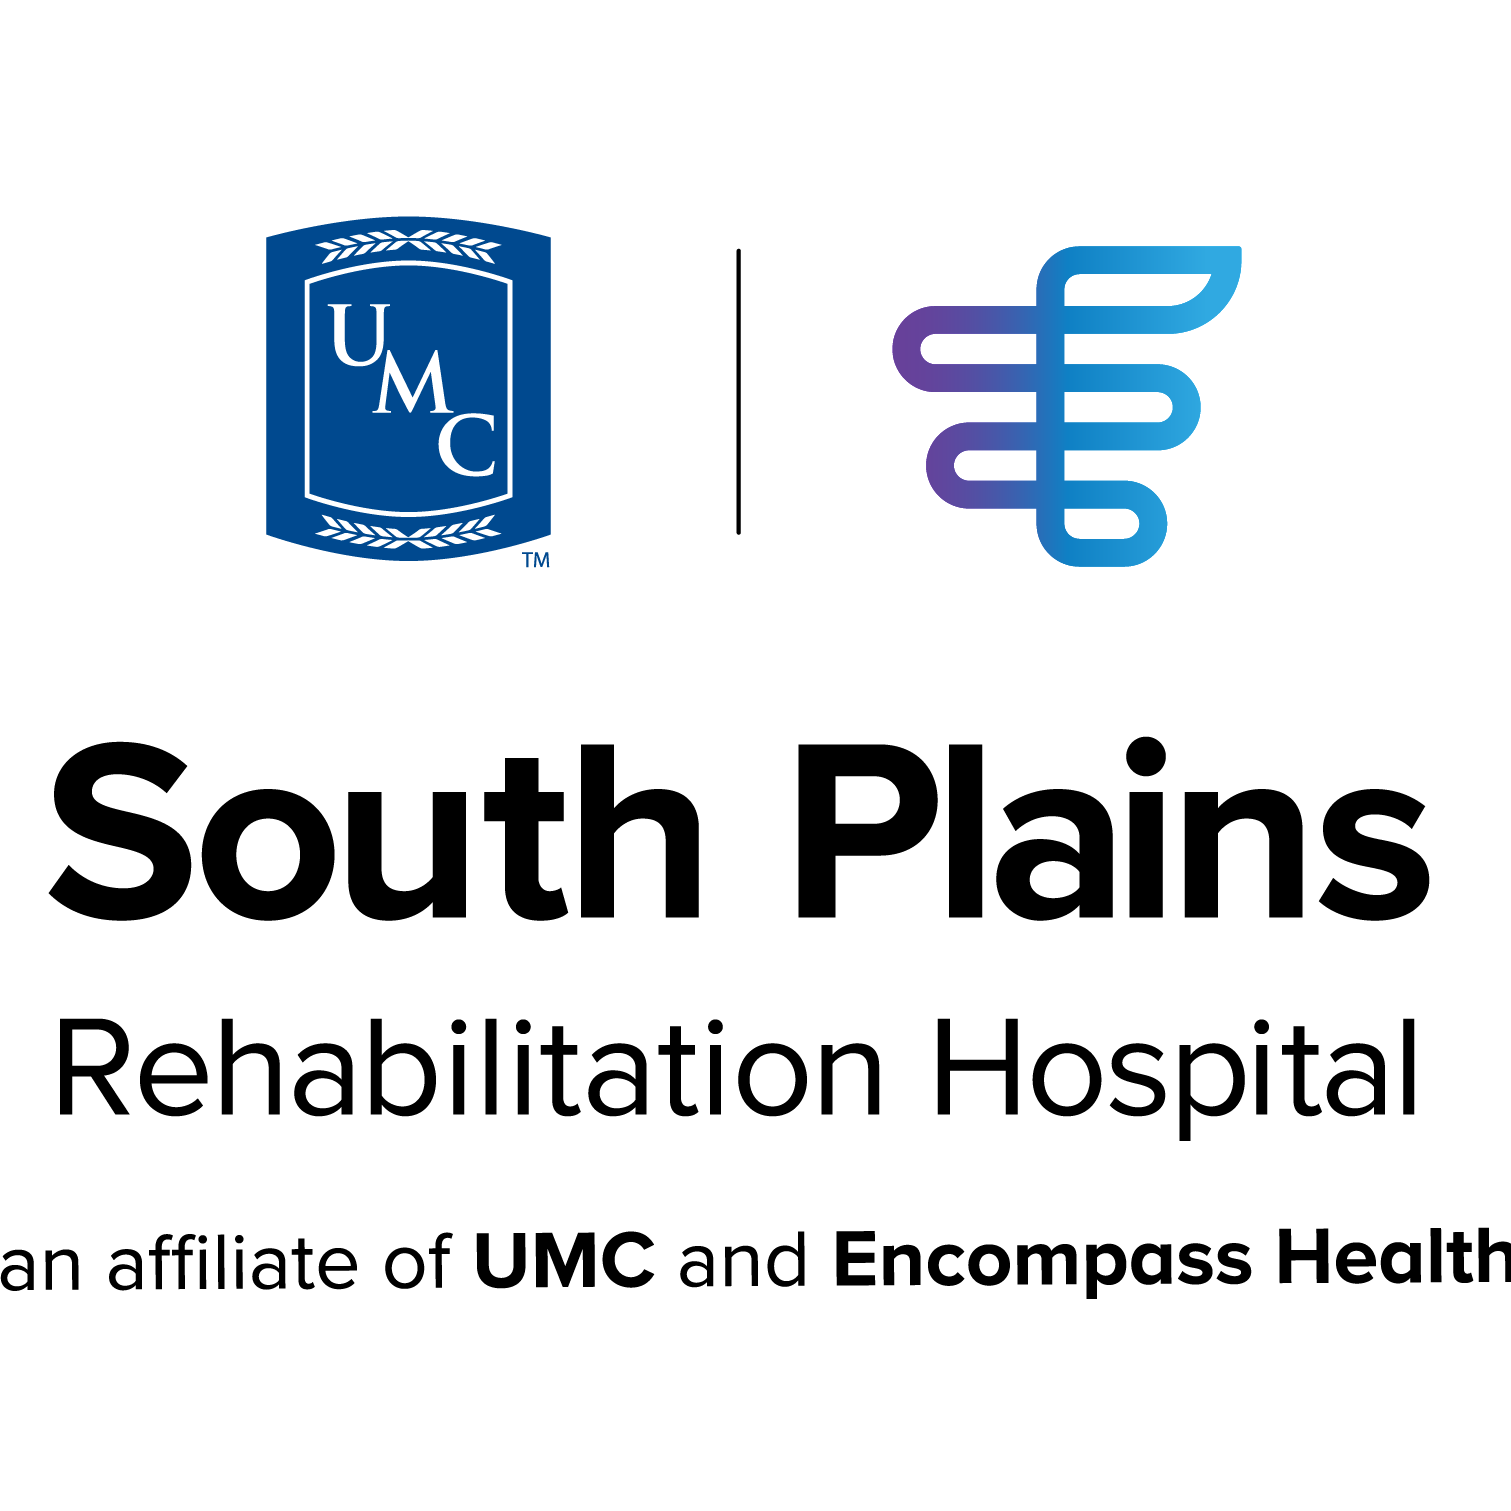 South Plains Rehabilitation Hospital